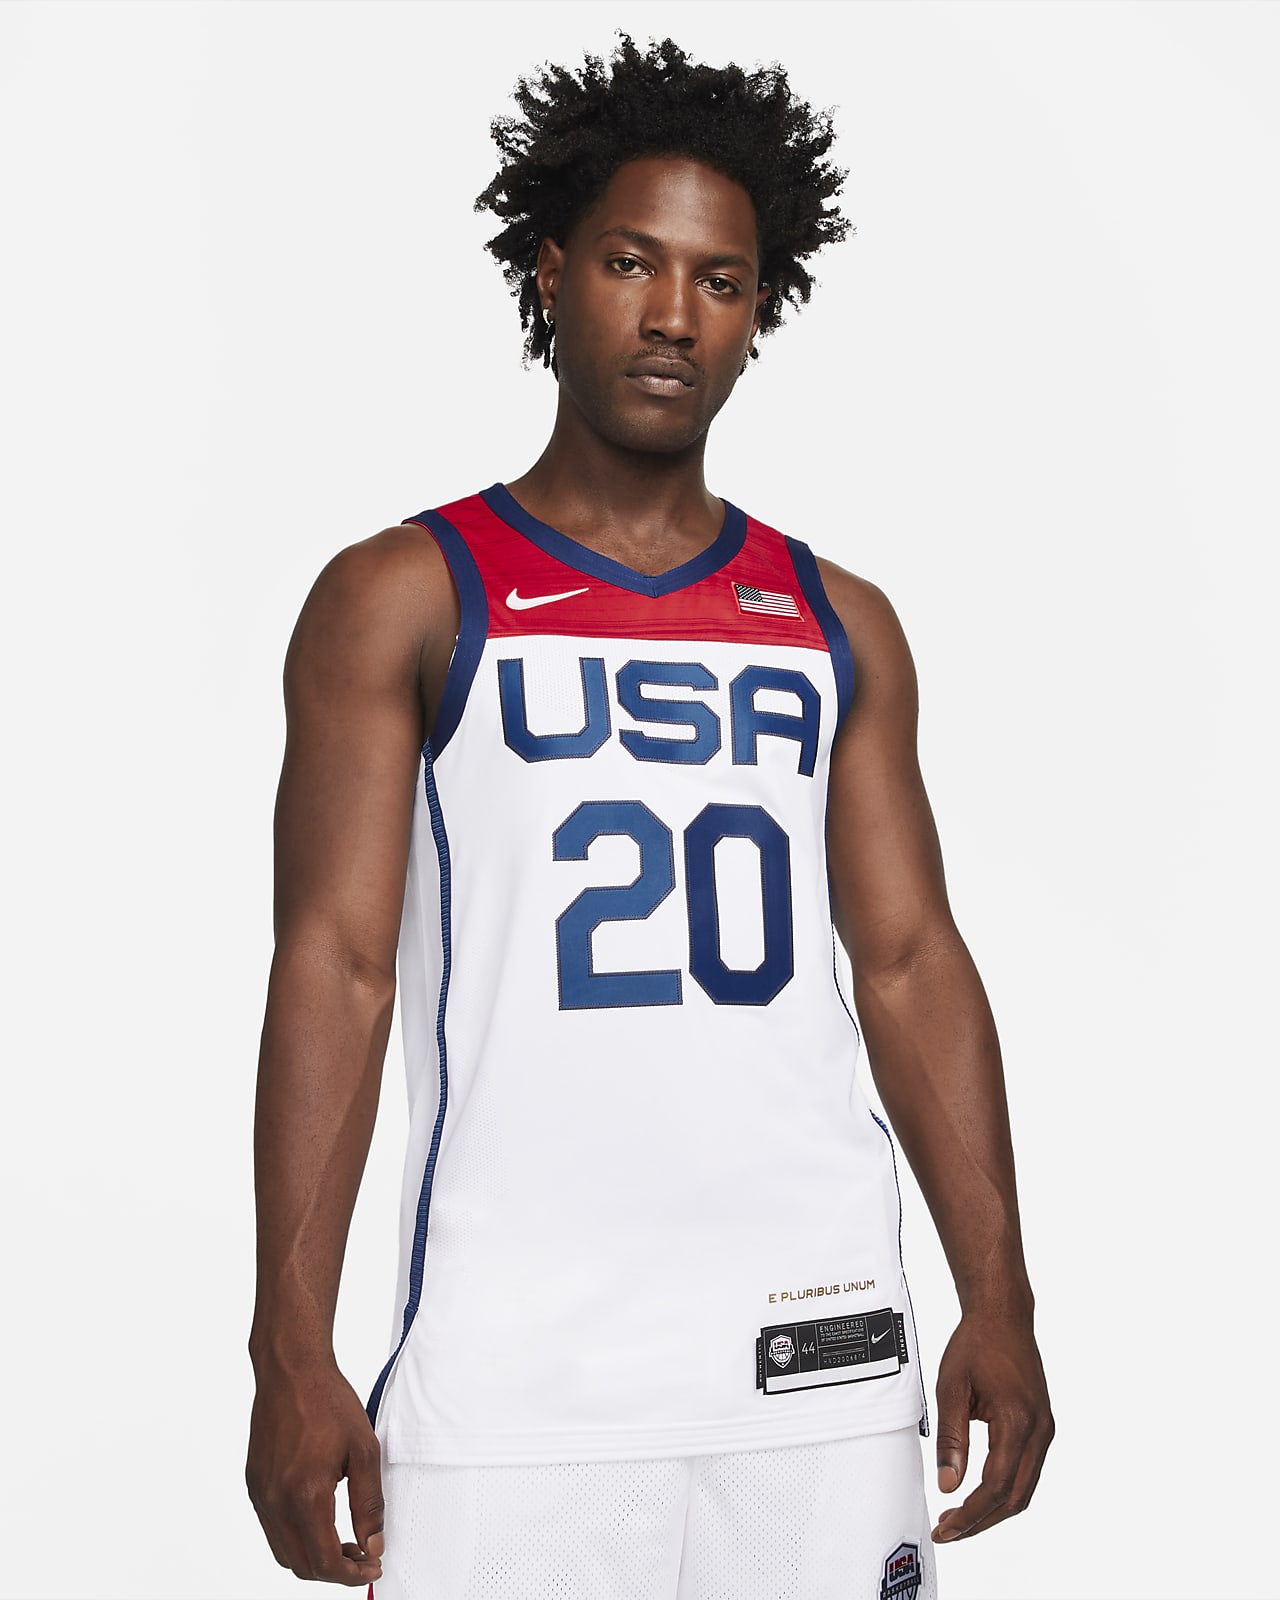 Jersey de básquetbol Nike Team USA local Authentic para hombre.